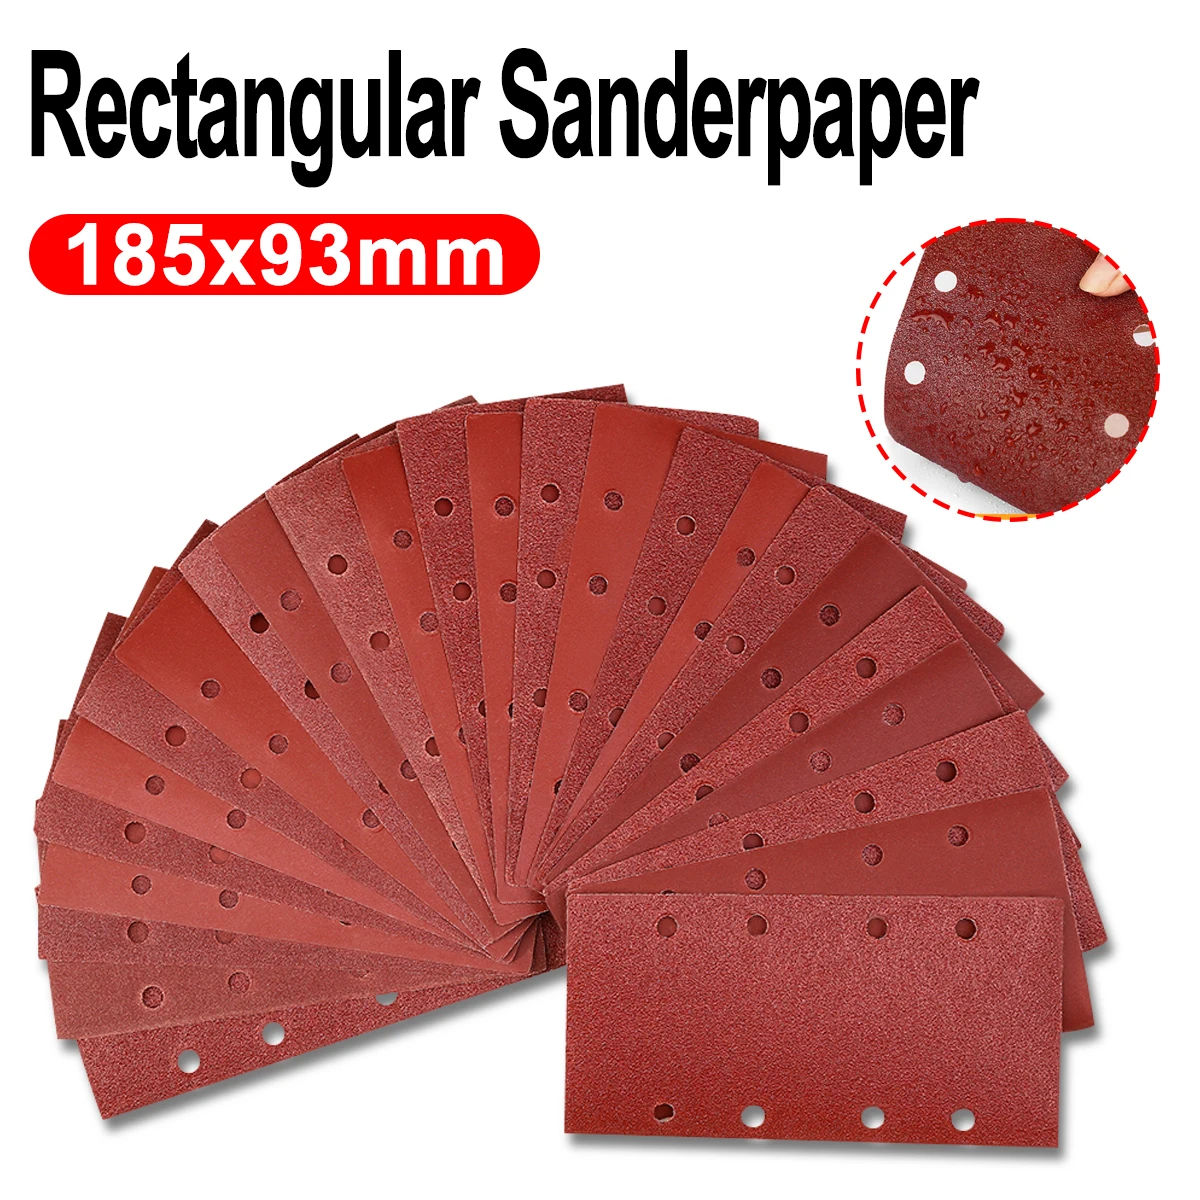 

93 x 185 mm Sanding Sheets Water/Dry Abrasive Sandpapers Hook and Loop Sander Pads Assorted Grits Fit Rectangular Sander